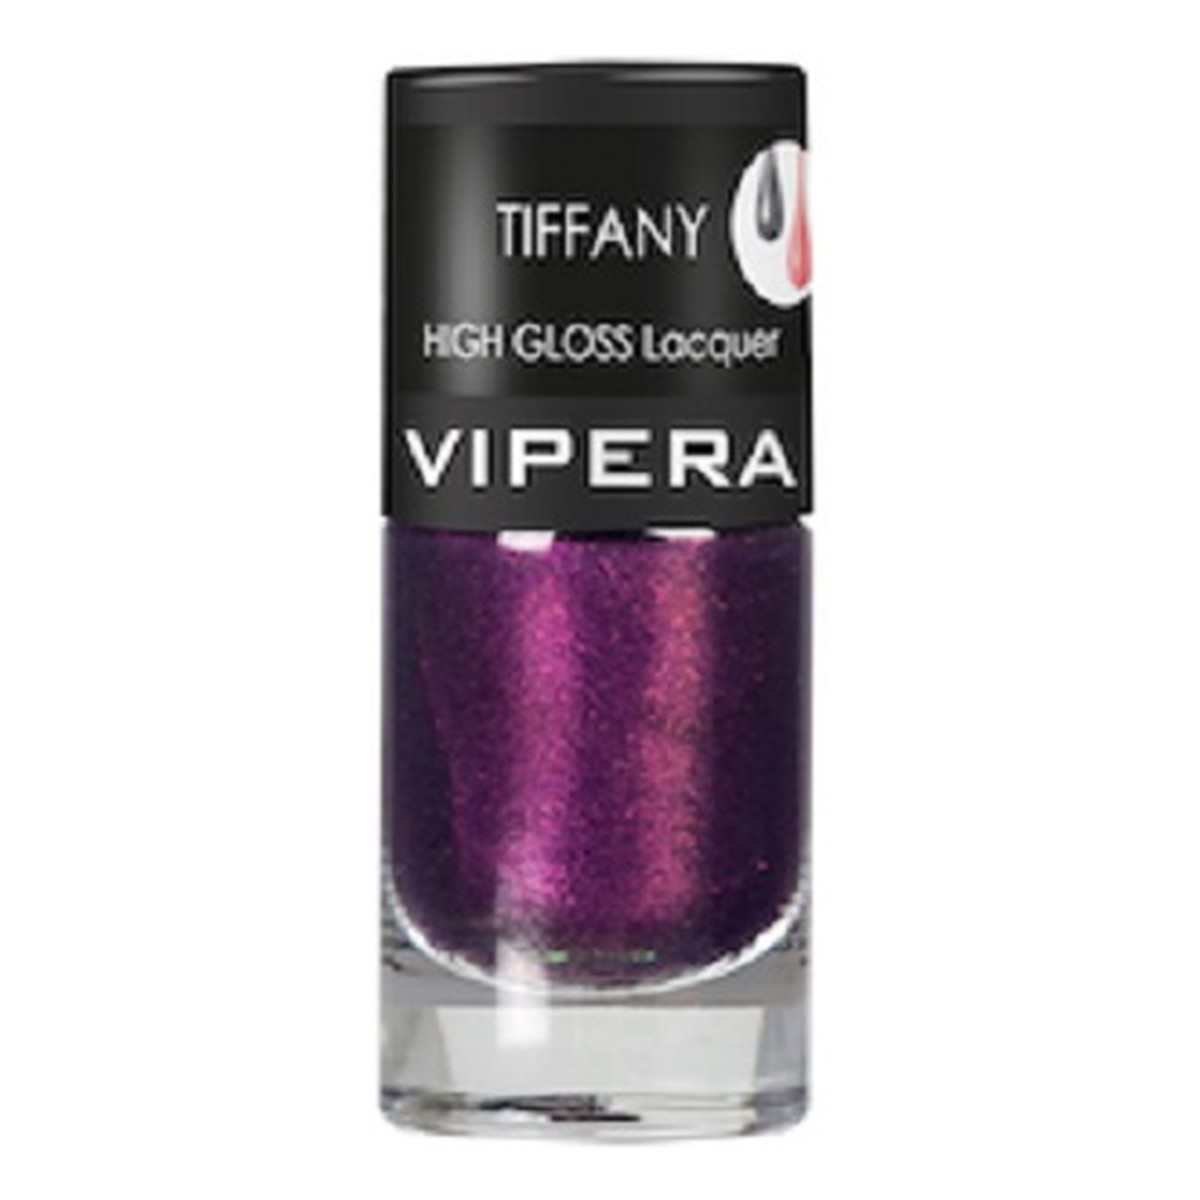 Vipera Tiffany High Gloss świetlisty lakier do paznokci 6ml